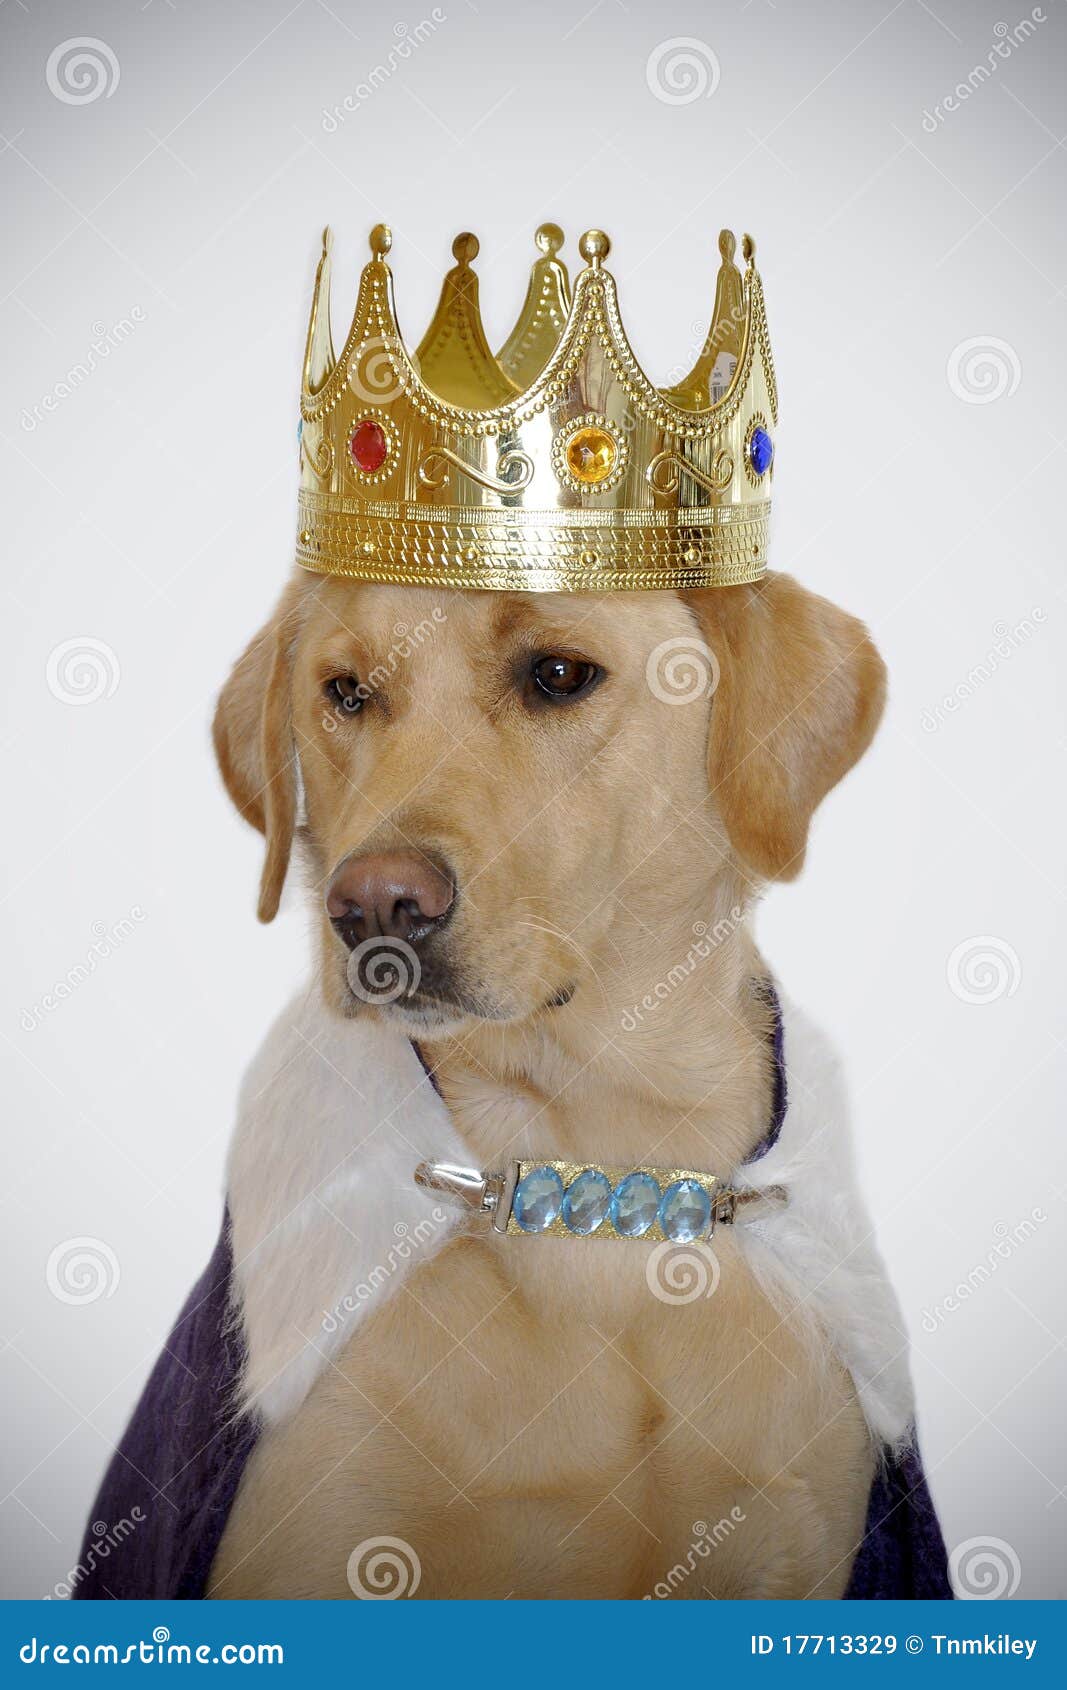 Dog Wearing Kings Crown Royalty Free Stock Images - Image: 17713329